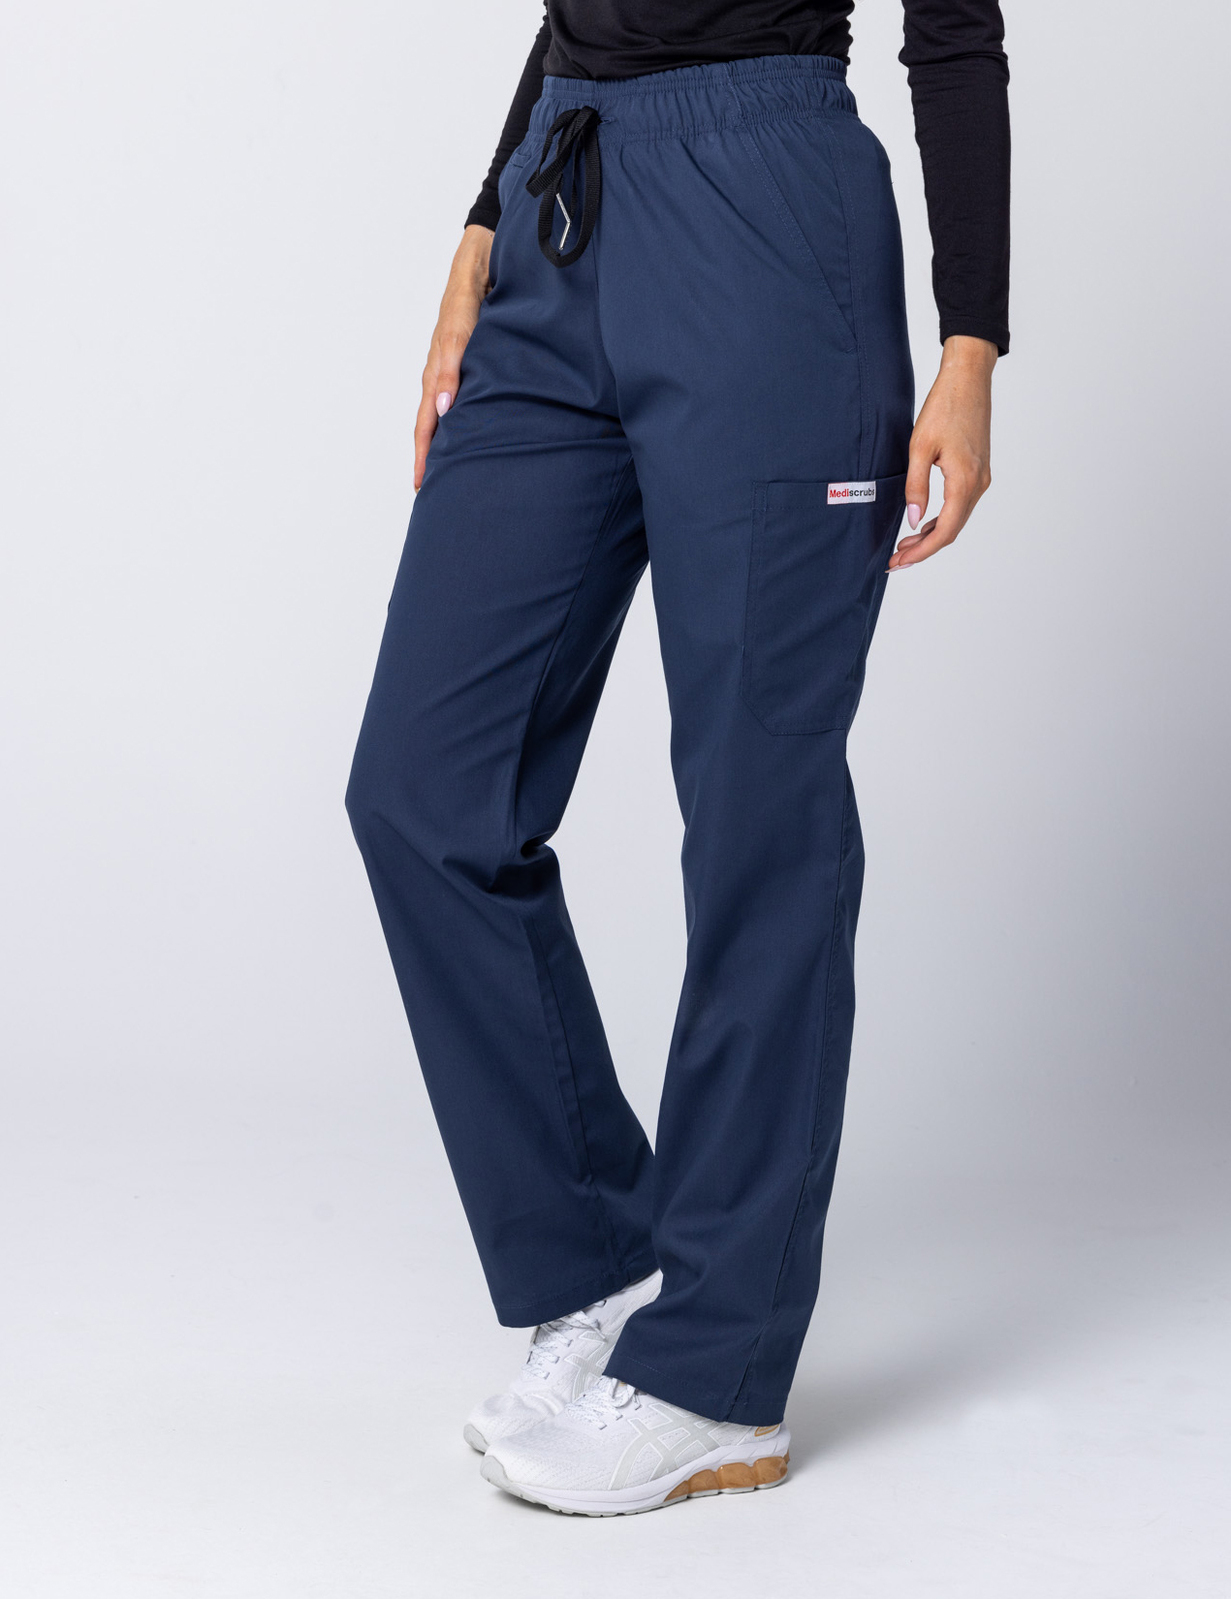 Women's Cargo Performance Pants - Navy - X Small